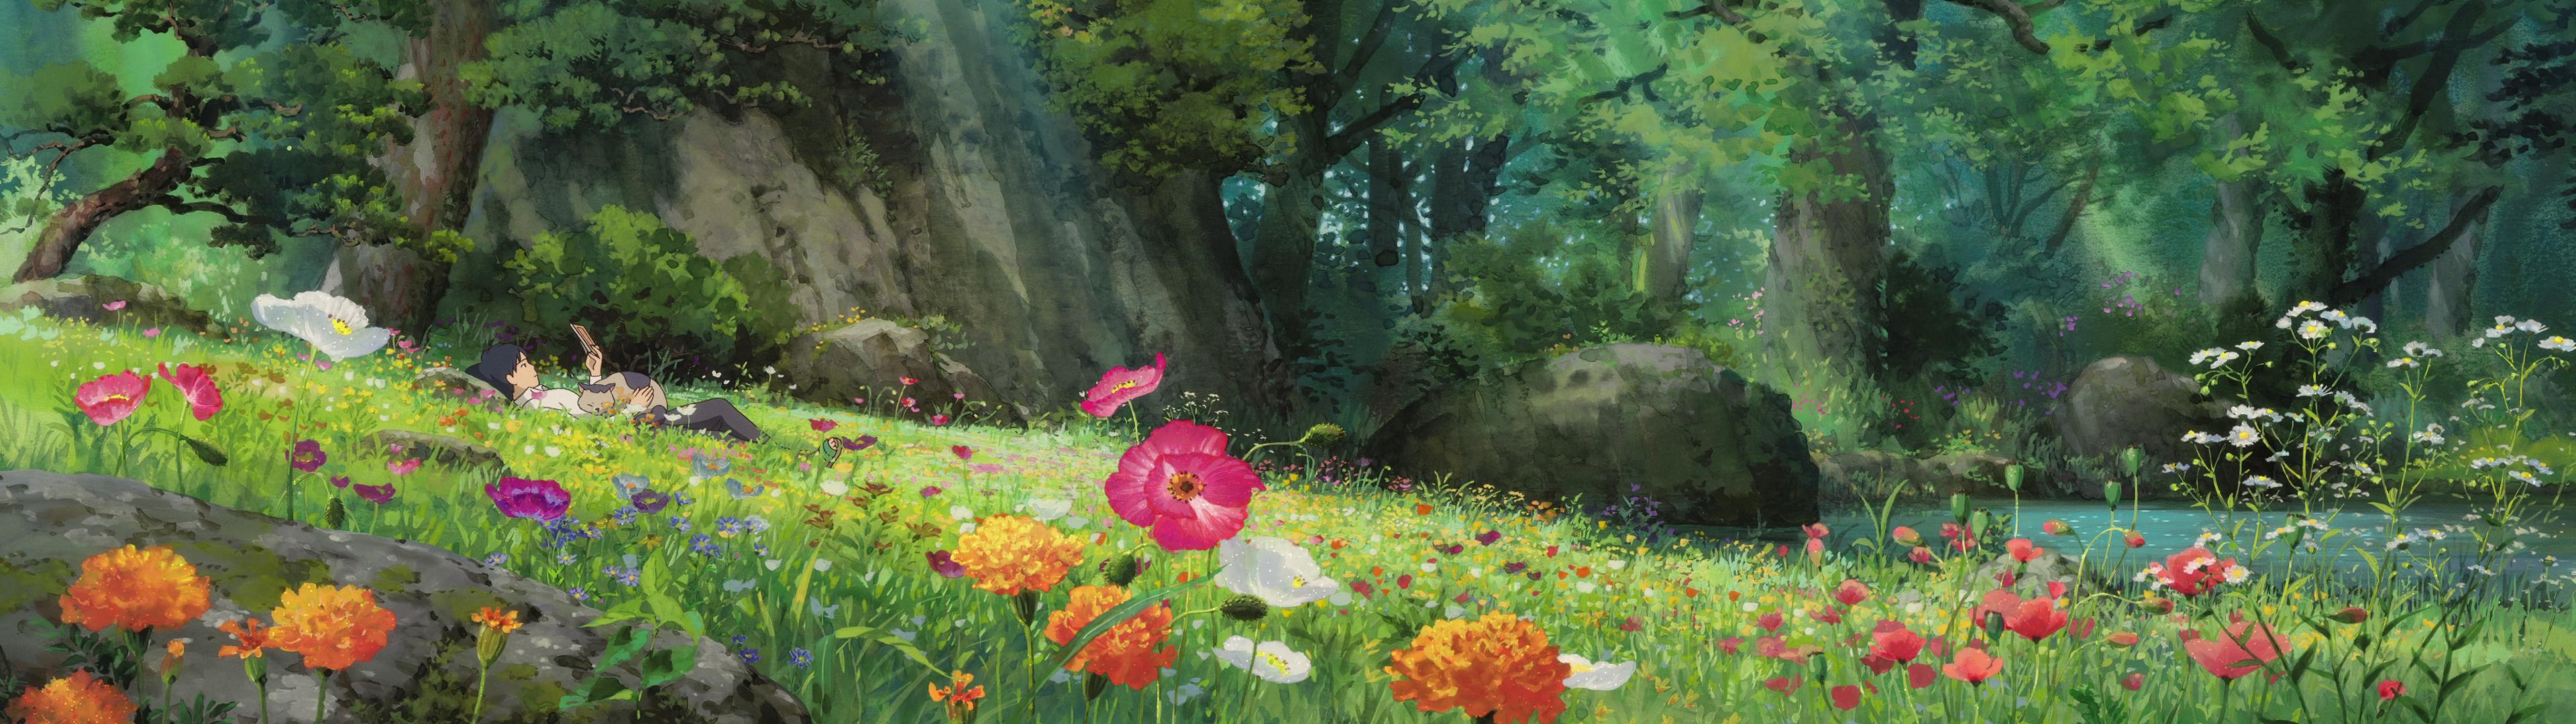 3840x1080 Ultrawide Studio Ghibli Wallpapers Album on Imgur